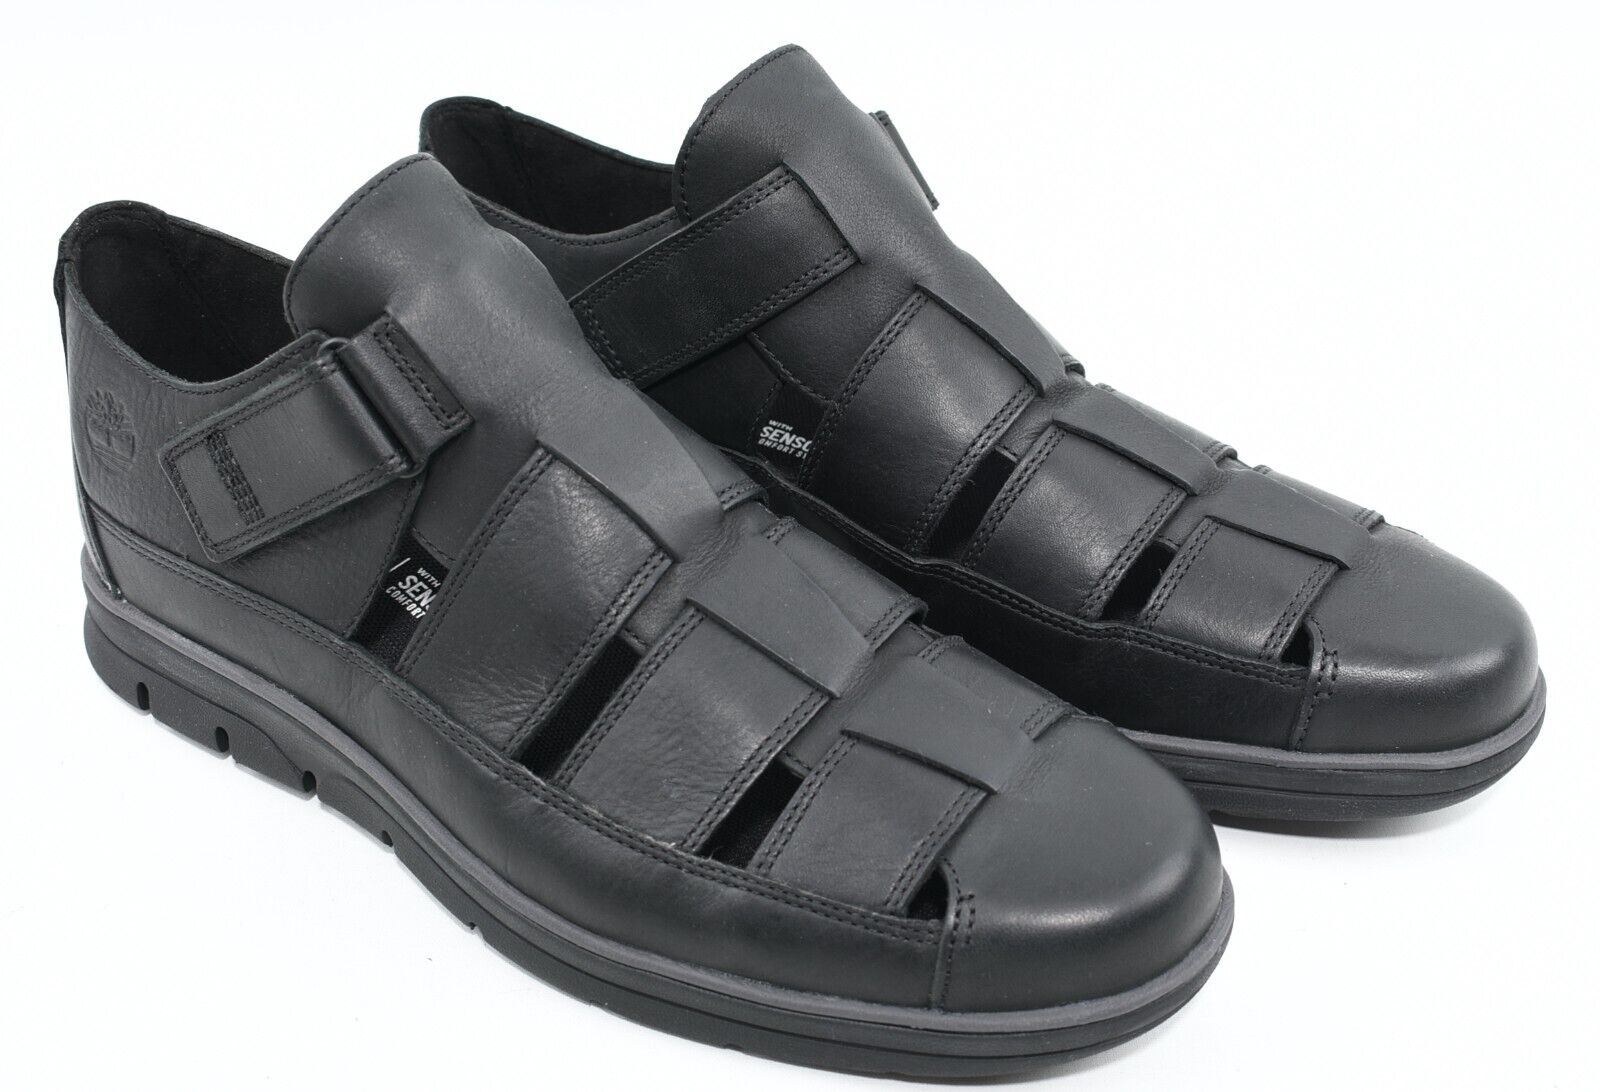 TIMBERLAND Mens BRADSTREET FISHERMAN Leather Sandals, Black, size UK 10 /EU 44.5